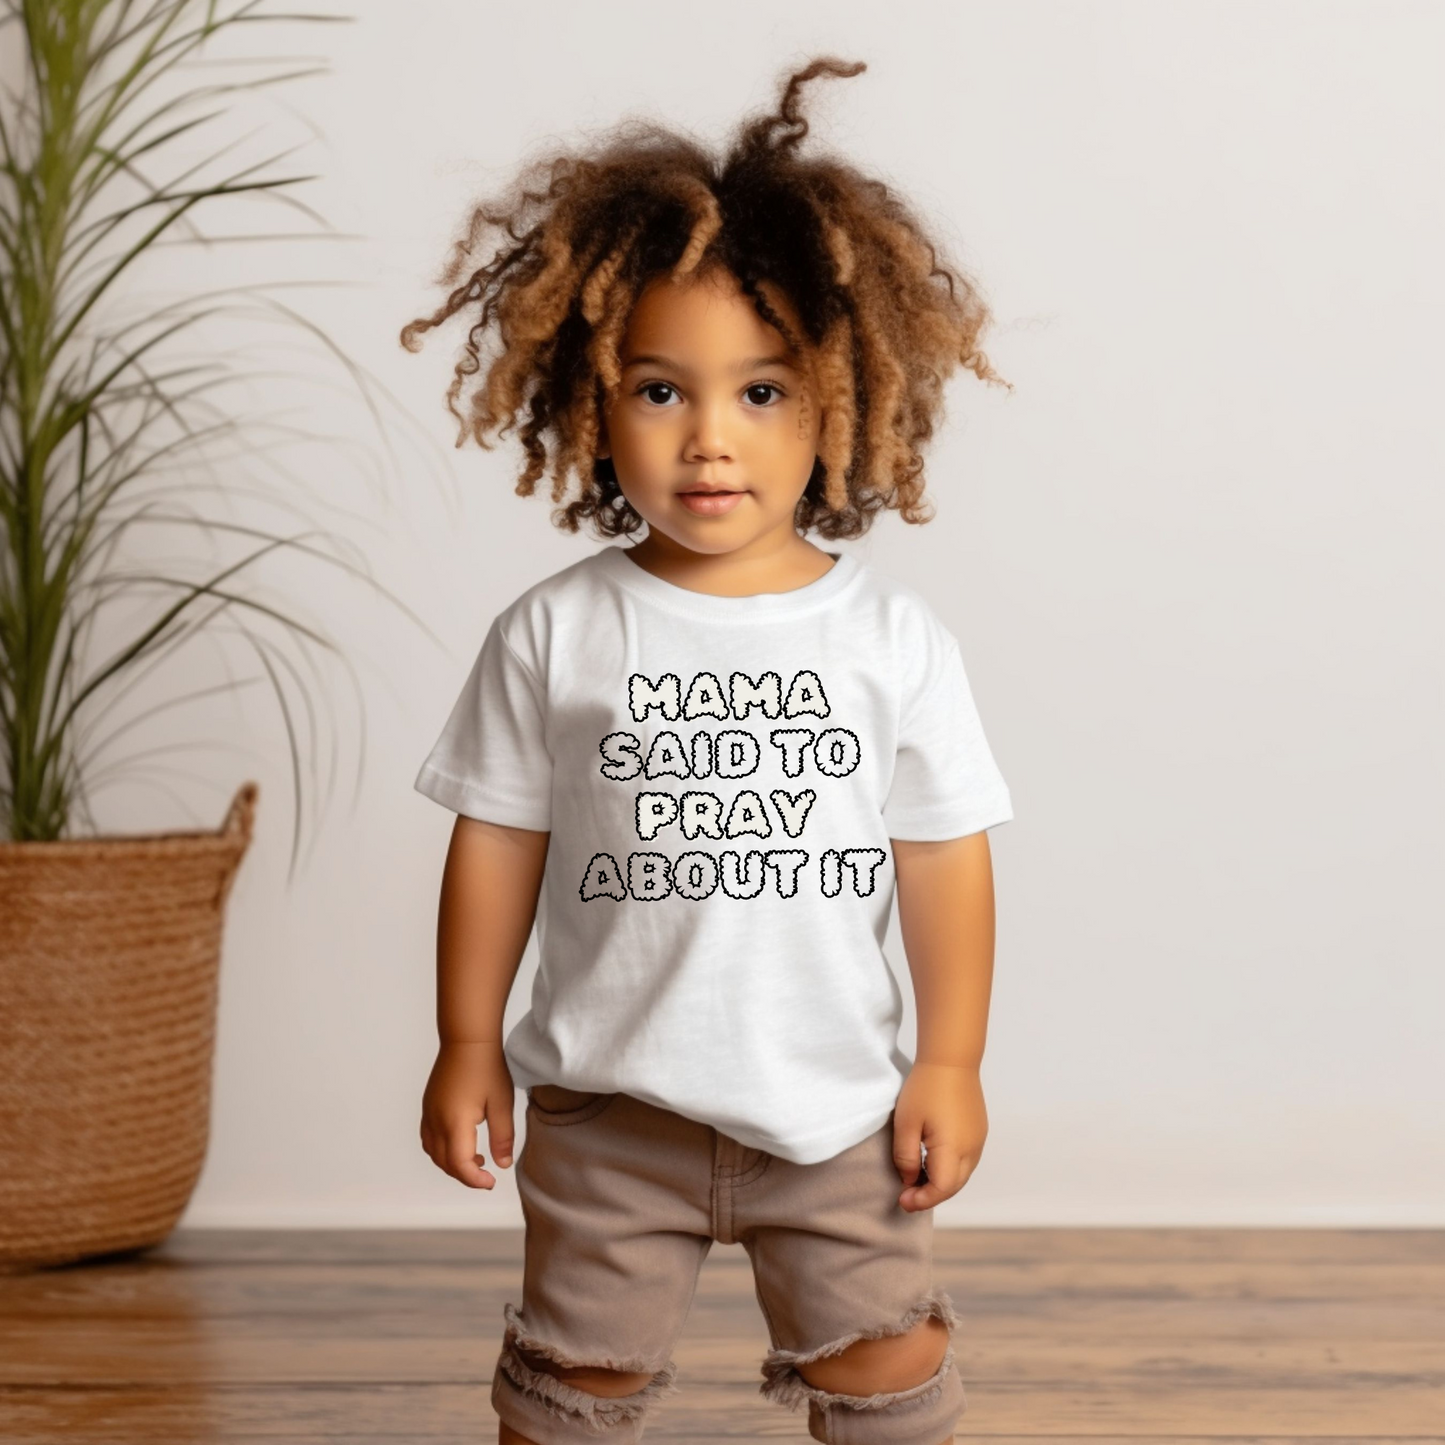 Mama Said to Pray About It Kids T-Shirt Bible Verse Motivational Quote Kids Graphic Tee Children Gift Travel Jamaica Kids Shirt